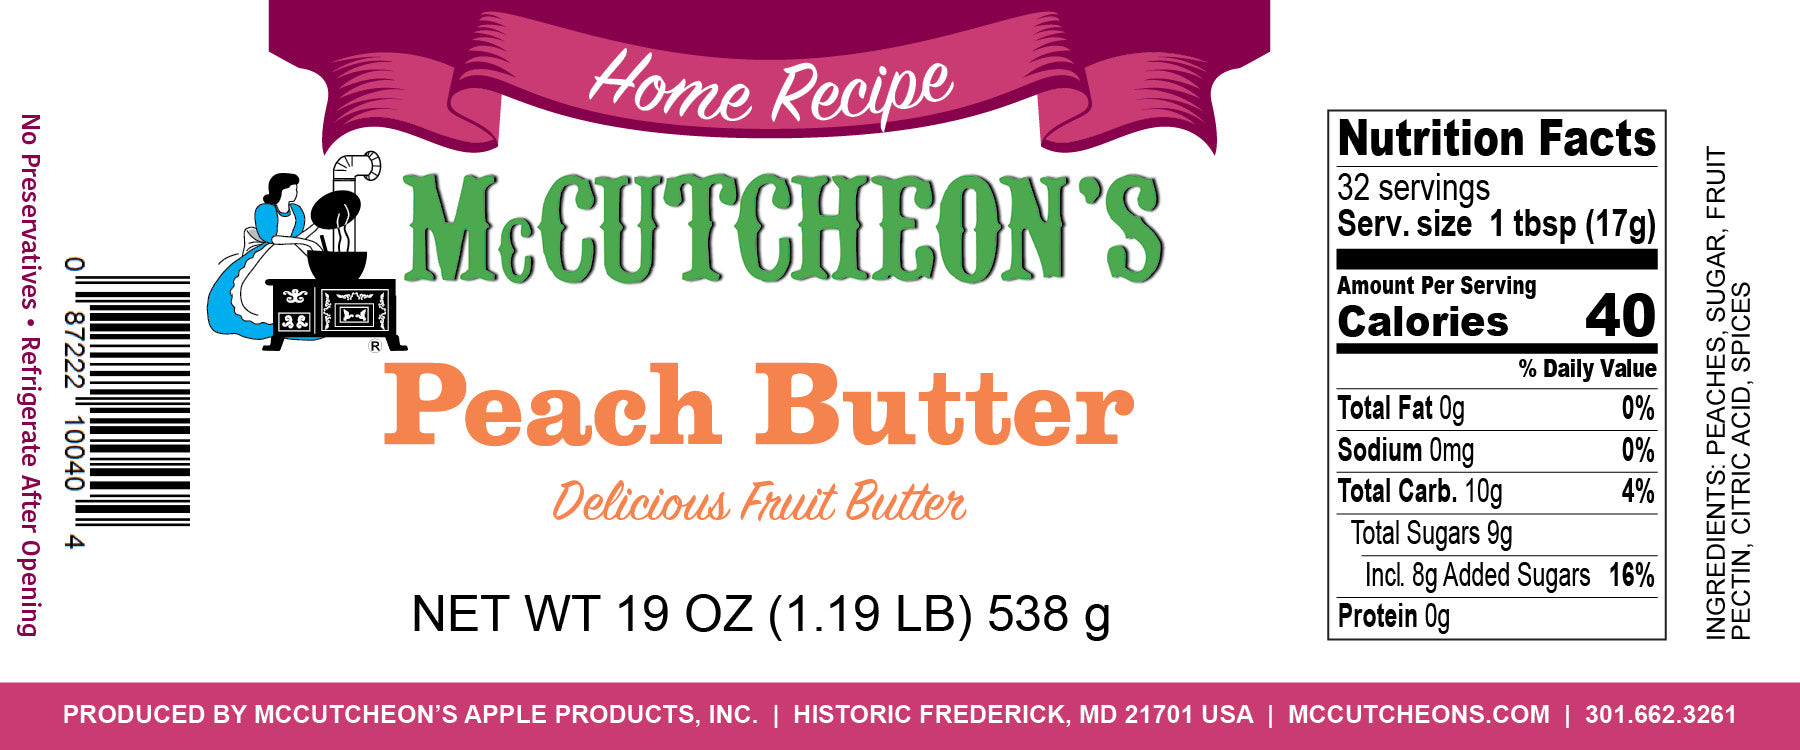 nutritional label for McCutcheon's Peach Butter